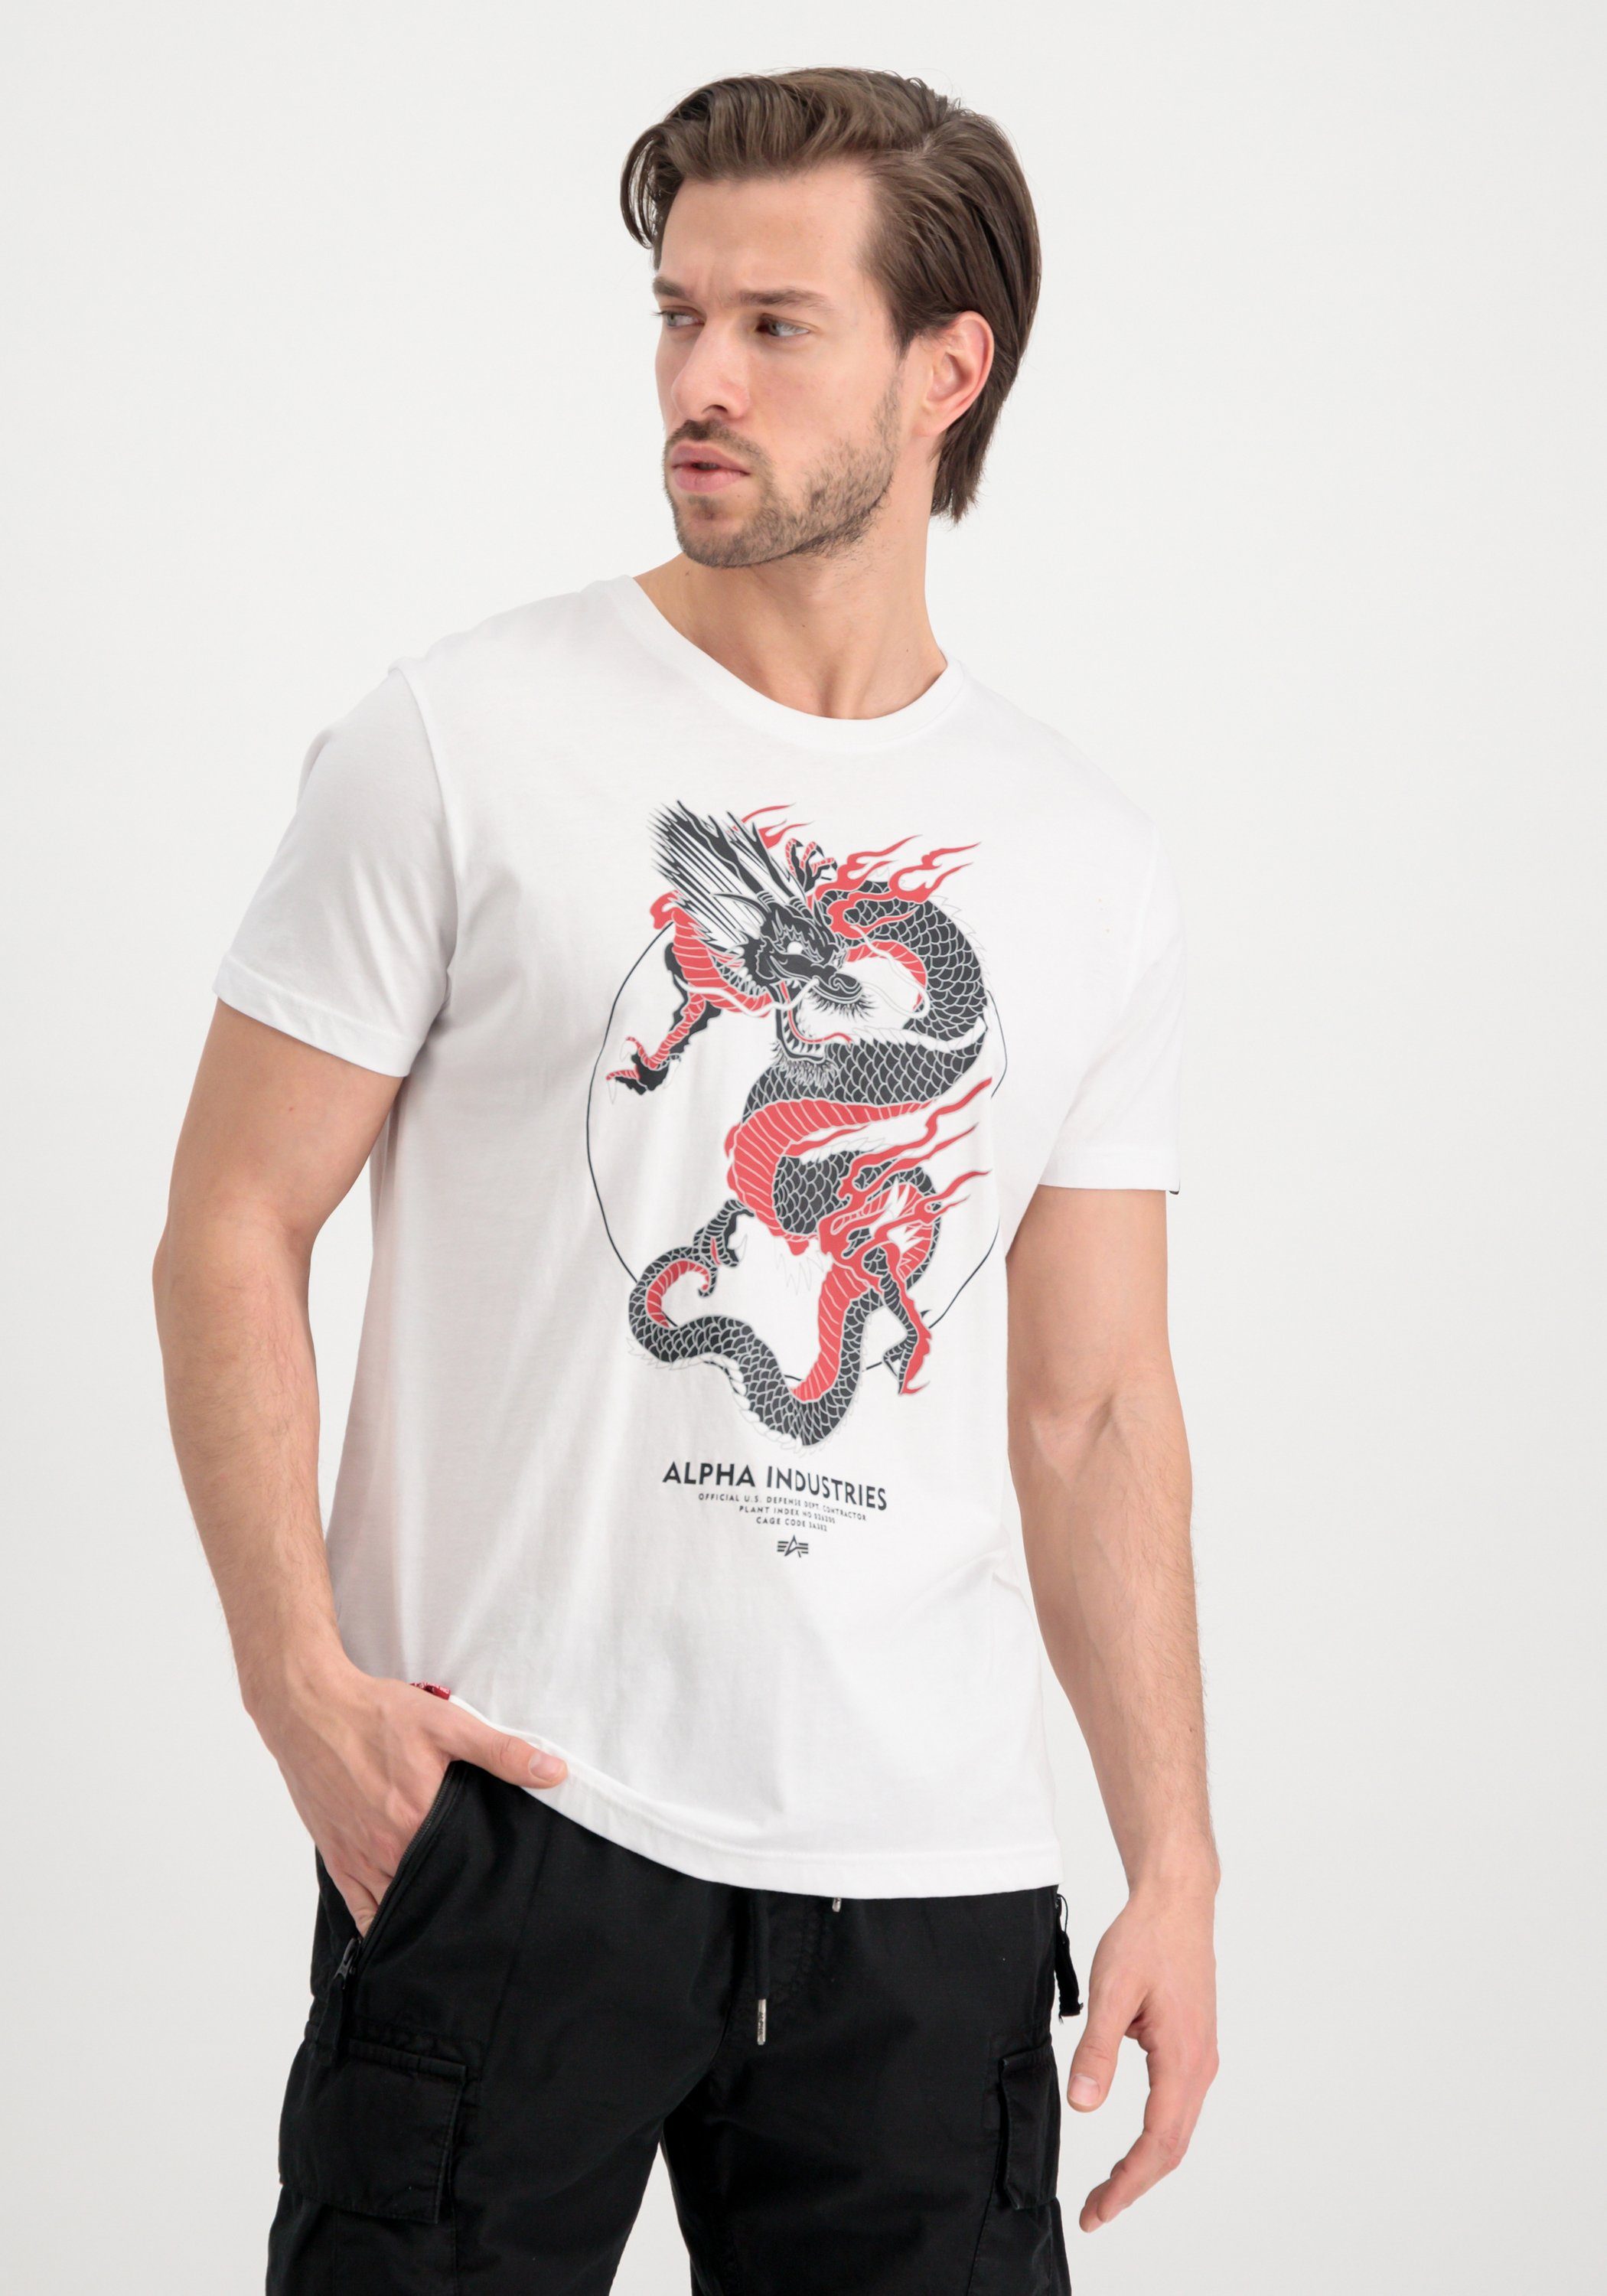 Men T-shirt Industries Heritage in Alpha T-Shirts OTTO | T Alpha online Dragon Industries de - shop